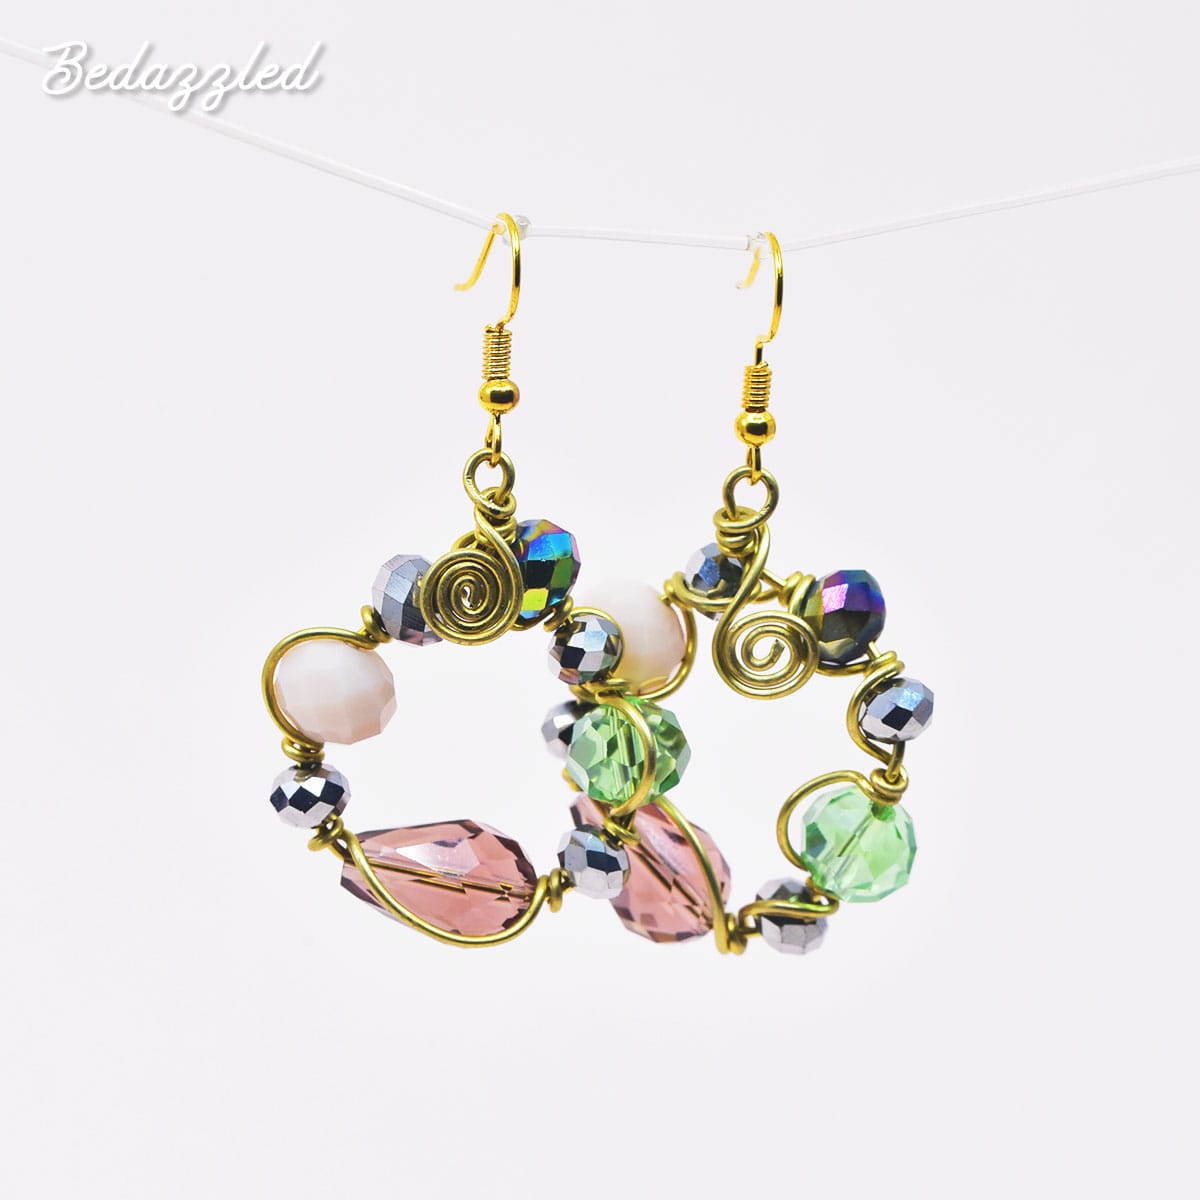 Bejeweled Style 8 - Earrings